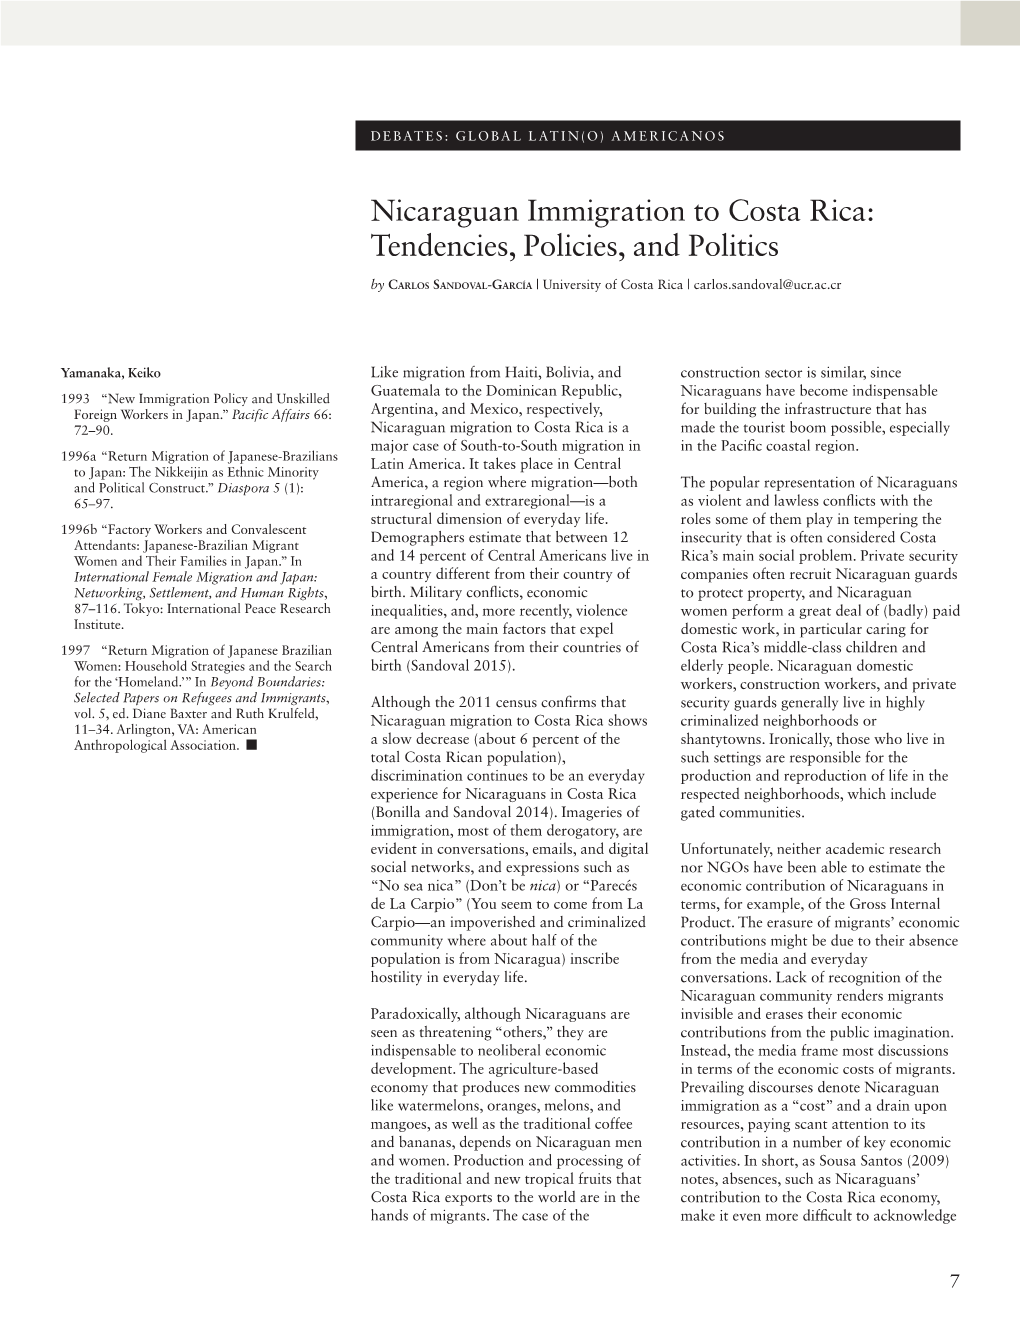 Nicaraguan Immigration to Costa Rica: Tendencies, Policies, and Politics